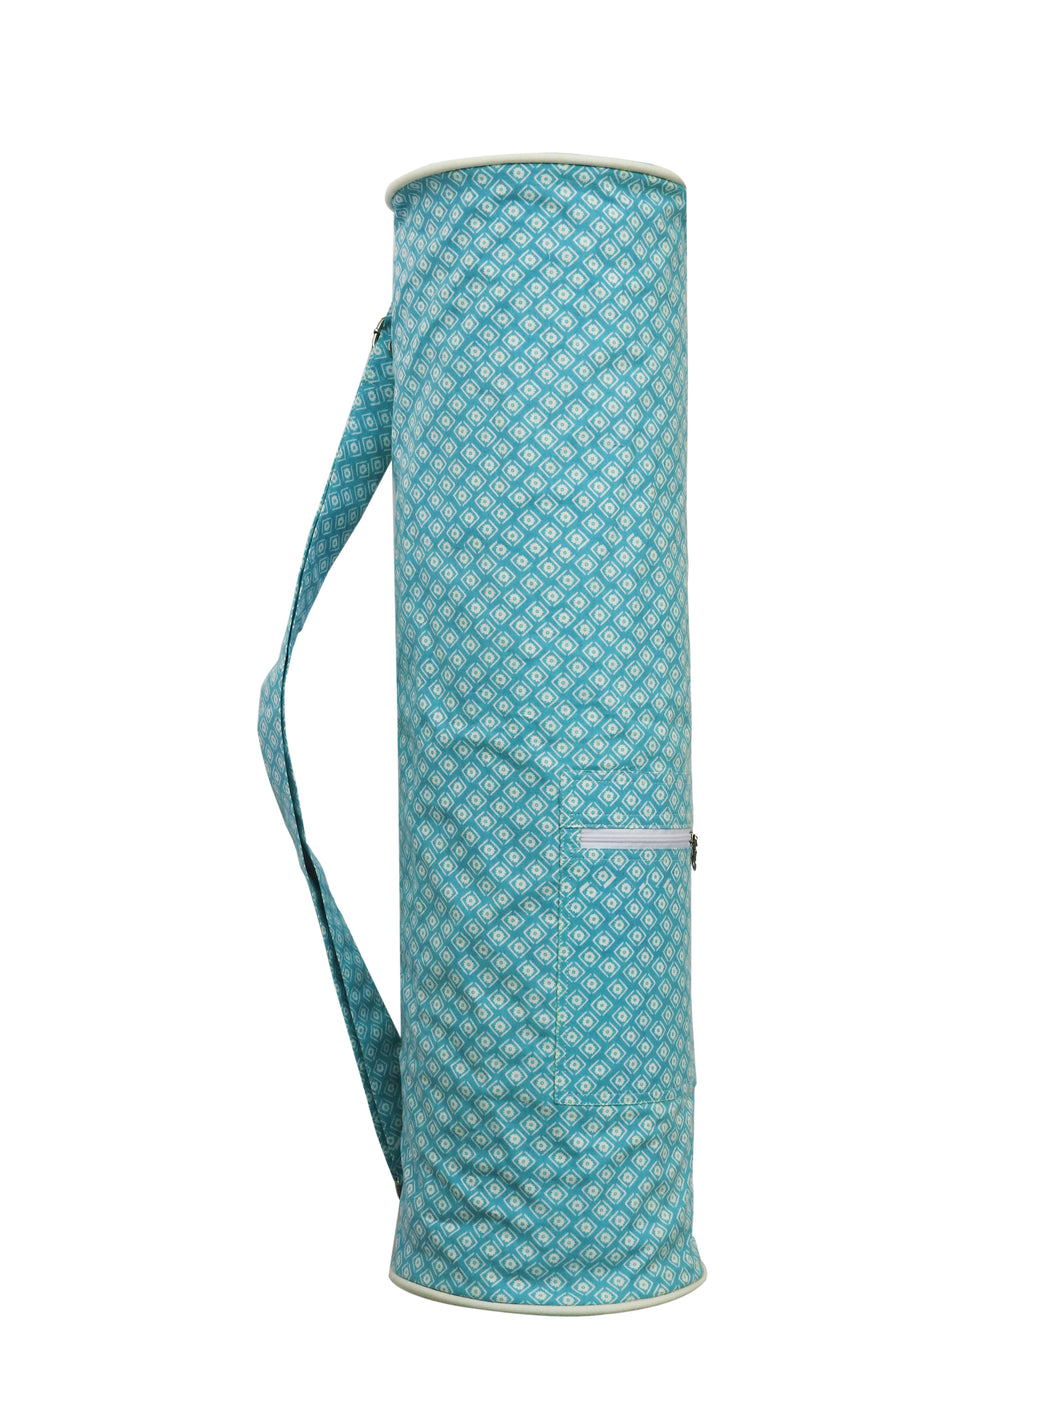 Yoga Mat Bag - Geometric Print - Aqua & White